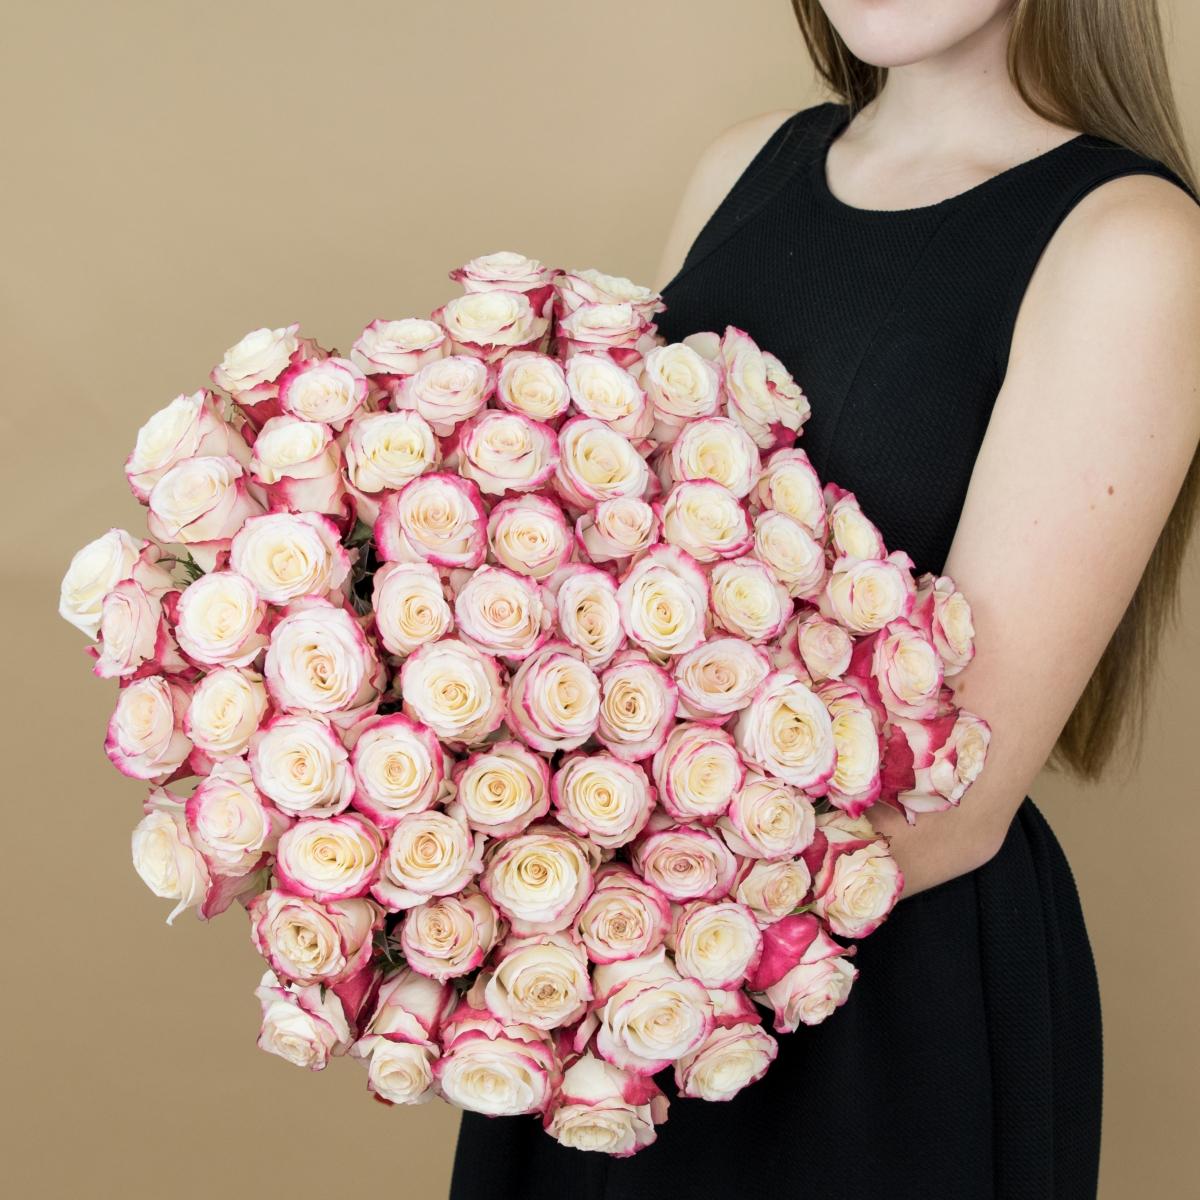 Розы красно-белые (40 см) Эквадор артикул букета  72slav